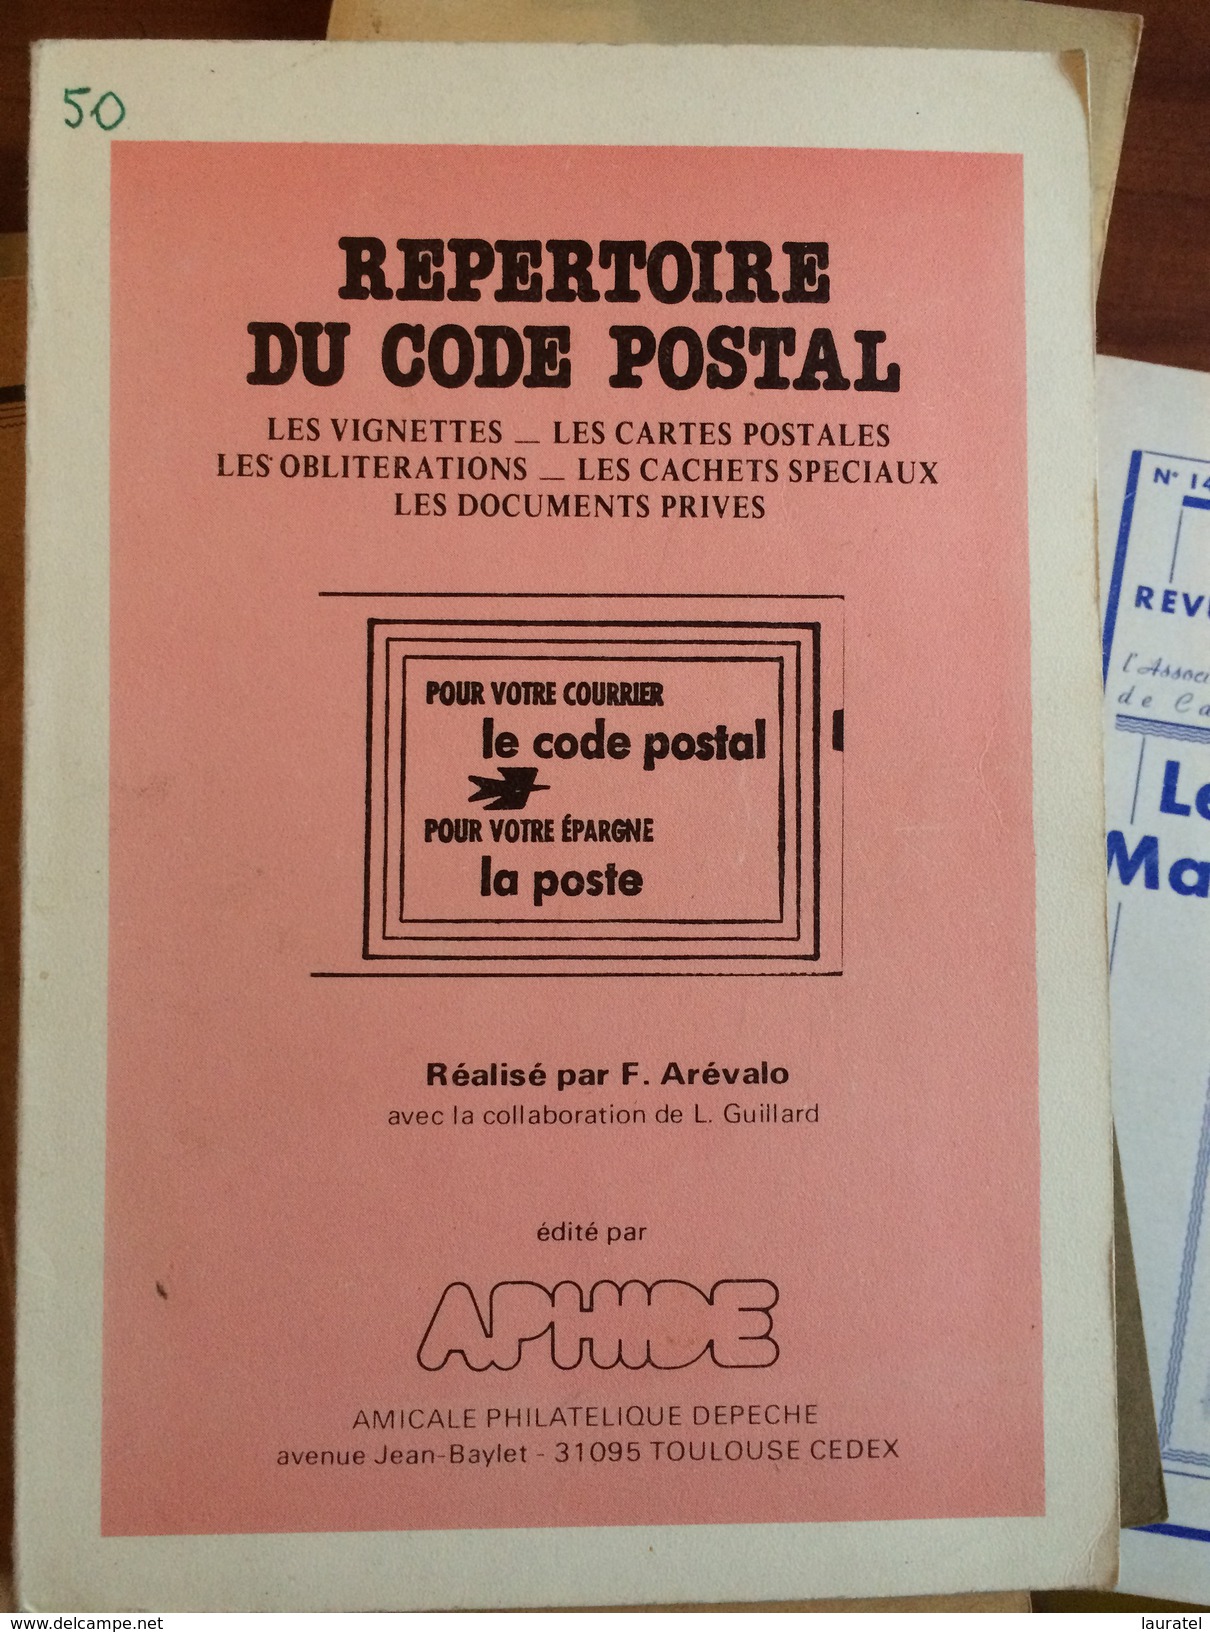 AREVALO F 1982. - REPERTOIRE CODE POSTAL, BROCHURE DE 144 PAGES DE1982 - TB & R - Stempel